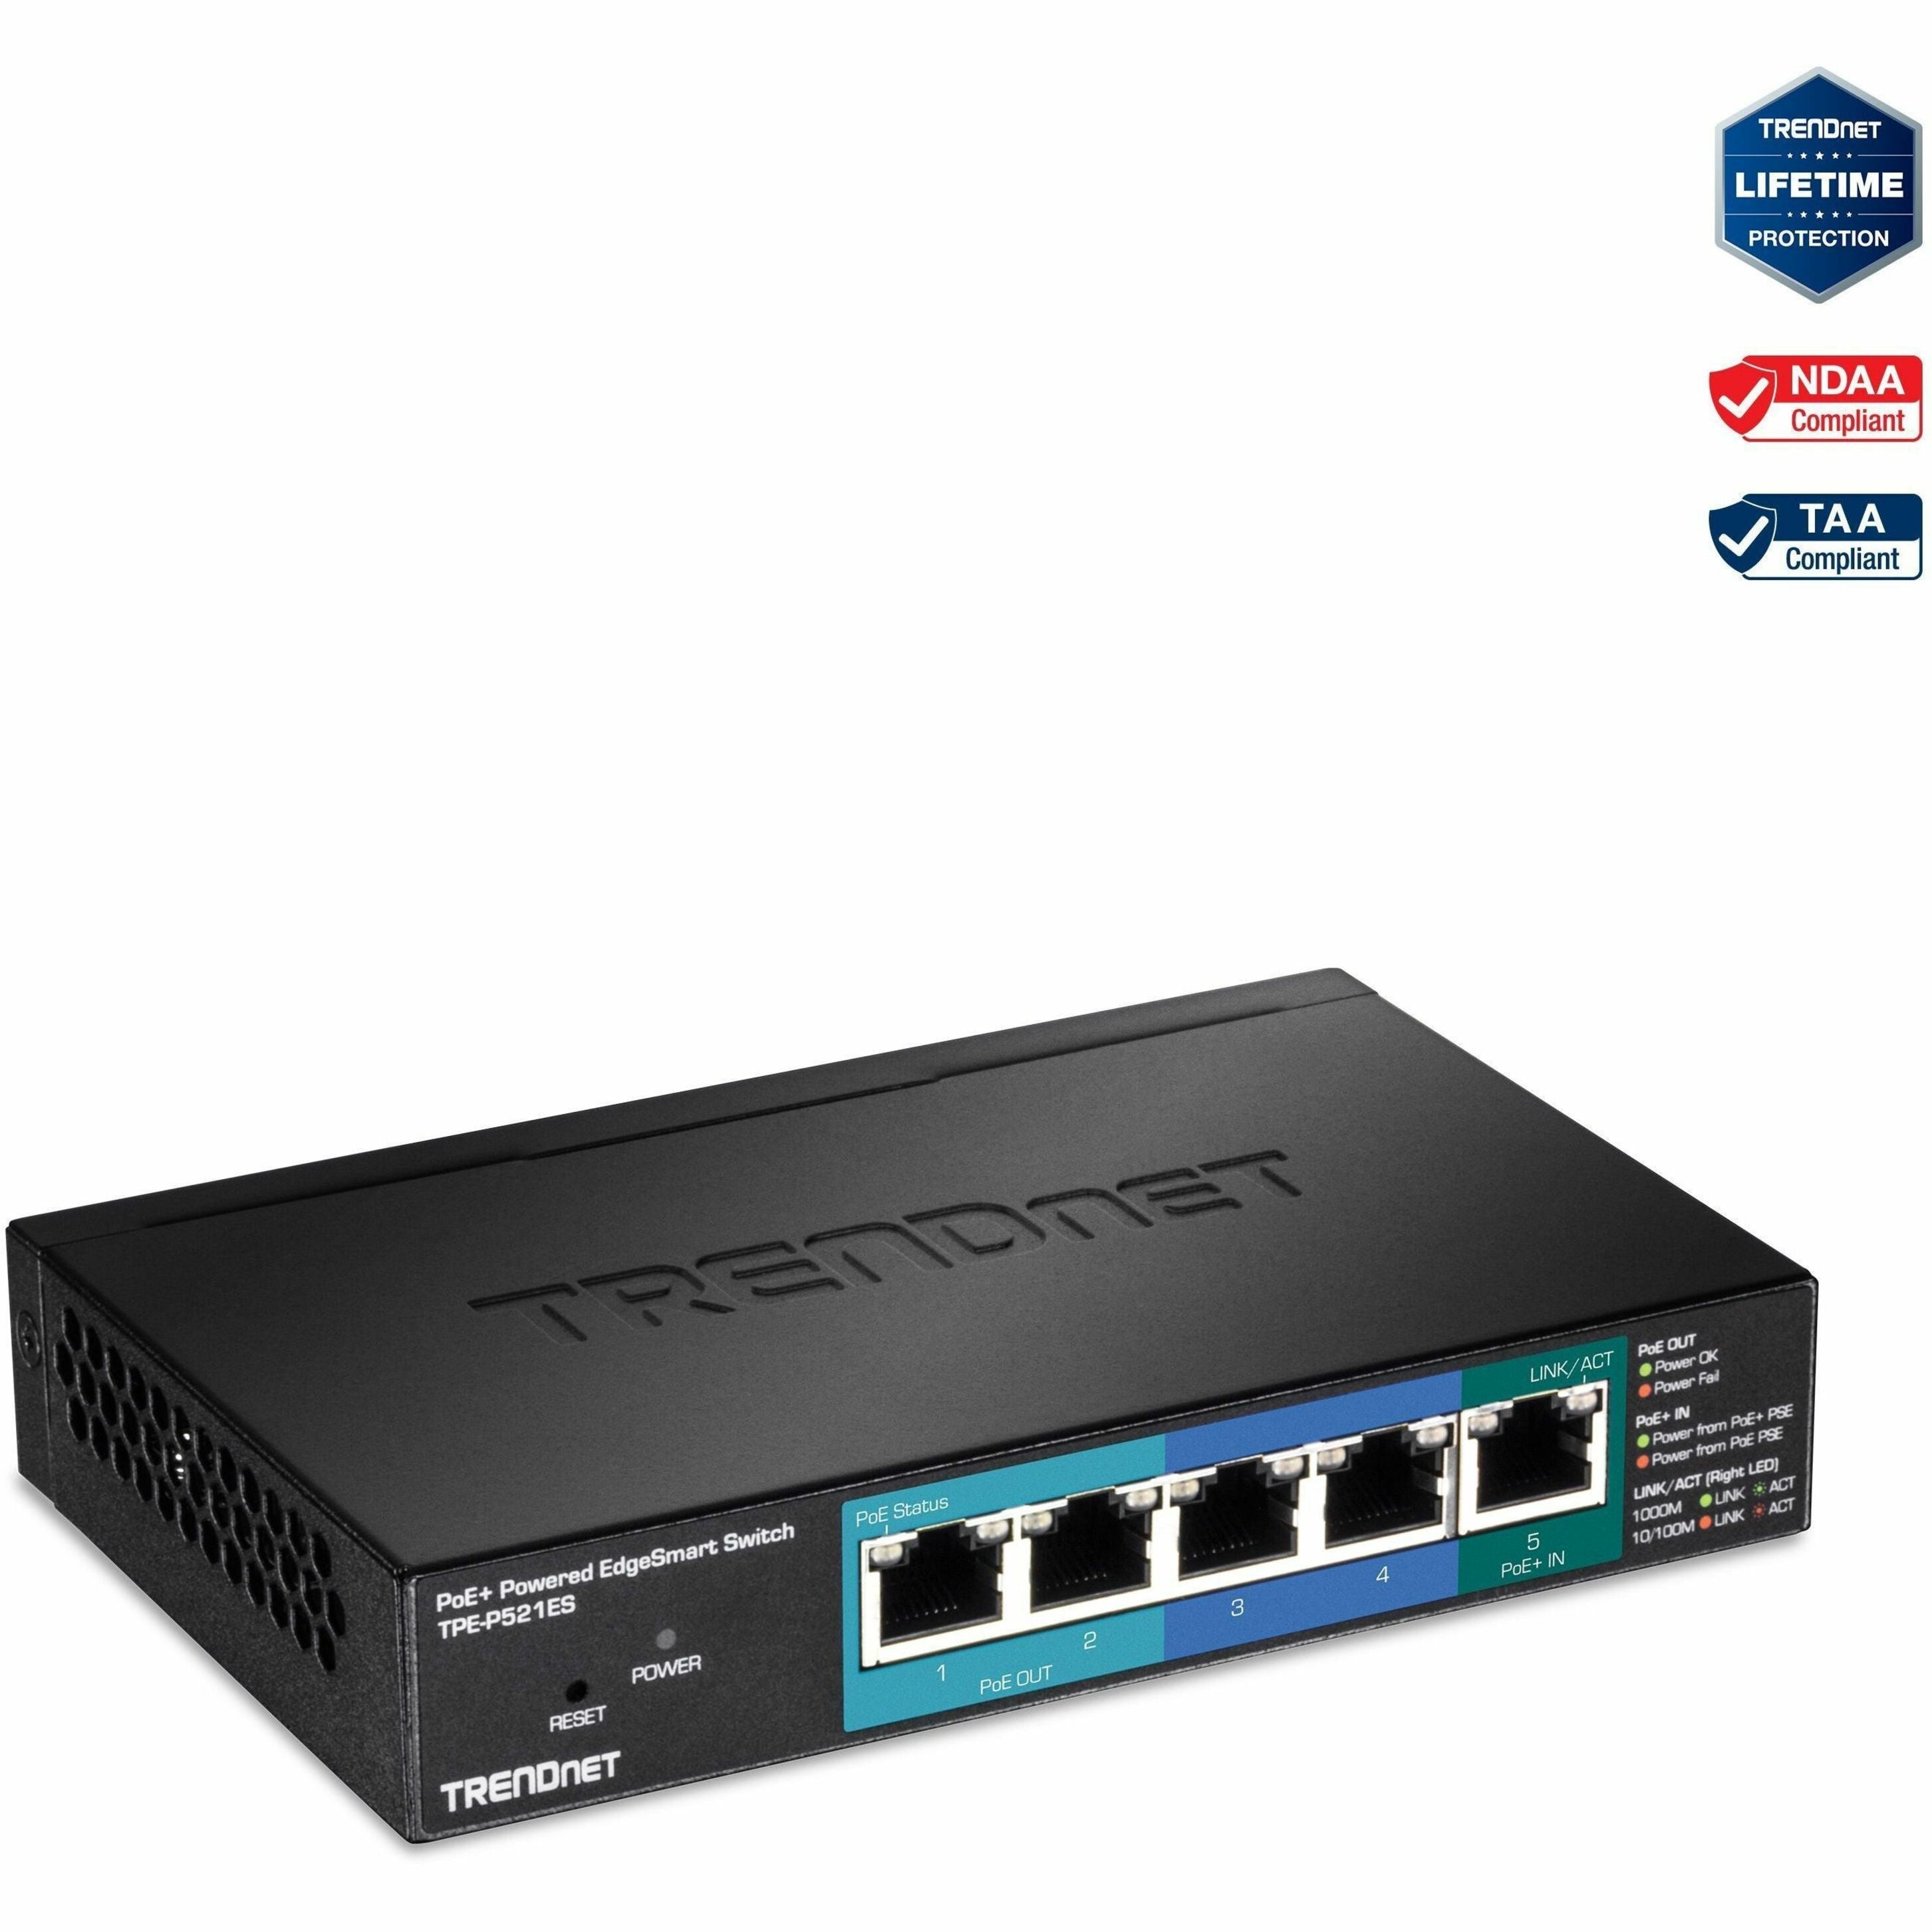 TRENDnet TPE-P521ES 5-Port Gigabit PoE+ Powered EdgeSmart Switch with PoE Pass Through, 18W PoE Budget, 10Gbps Switching Capacity